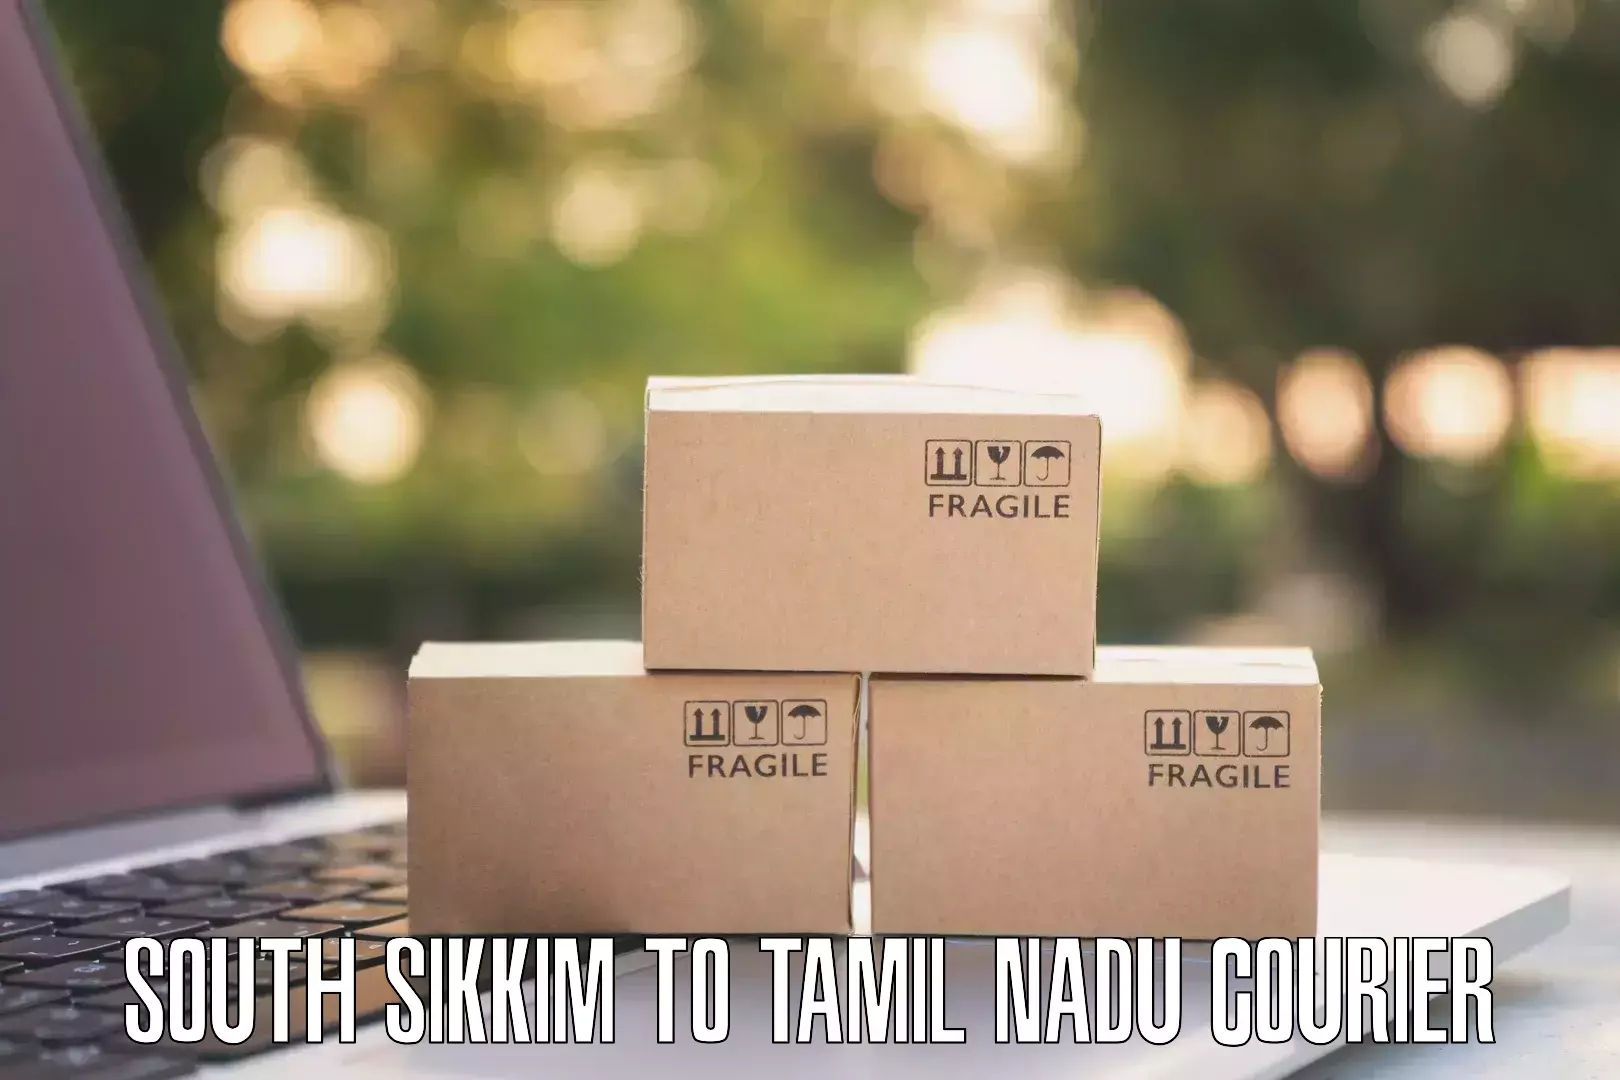 International parcel service South Sikkim to Tamil Nadu